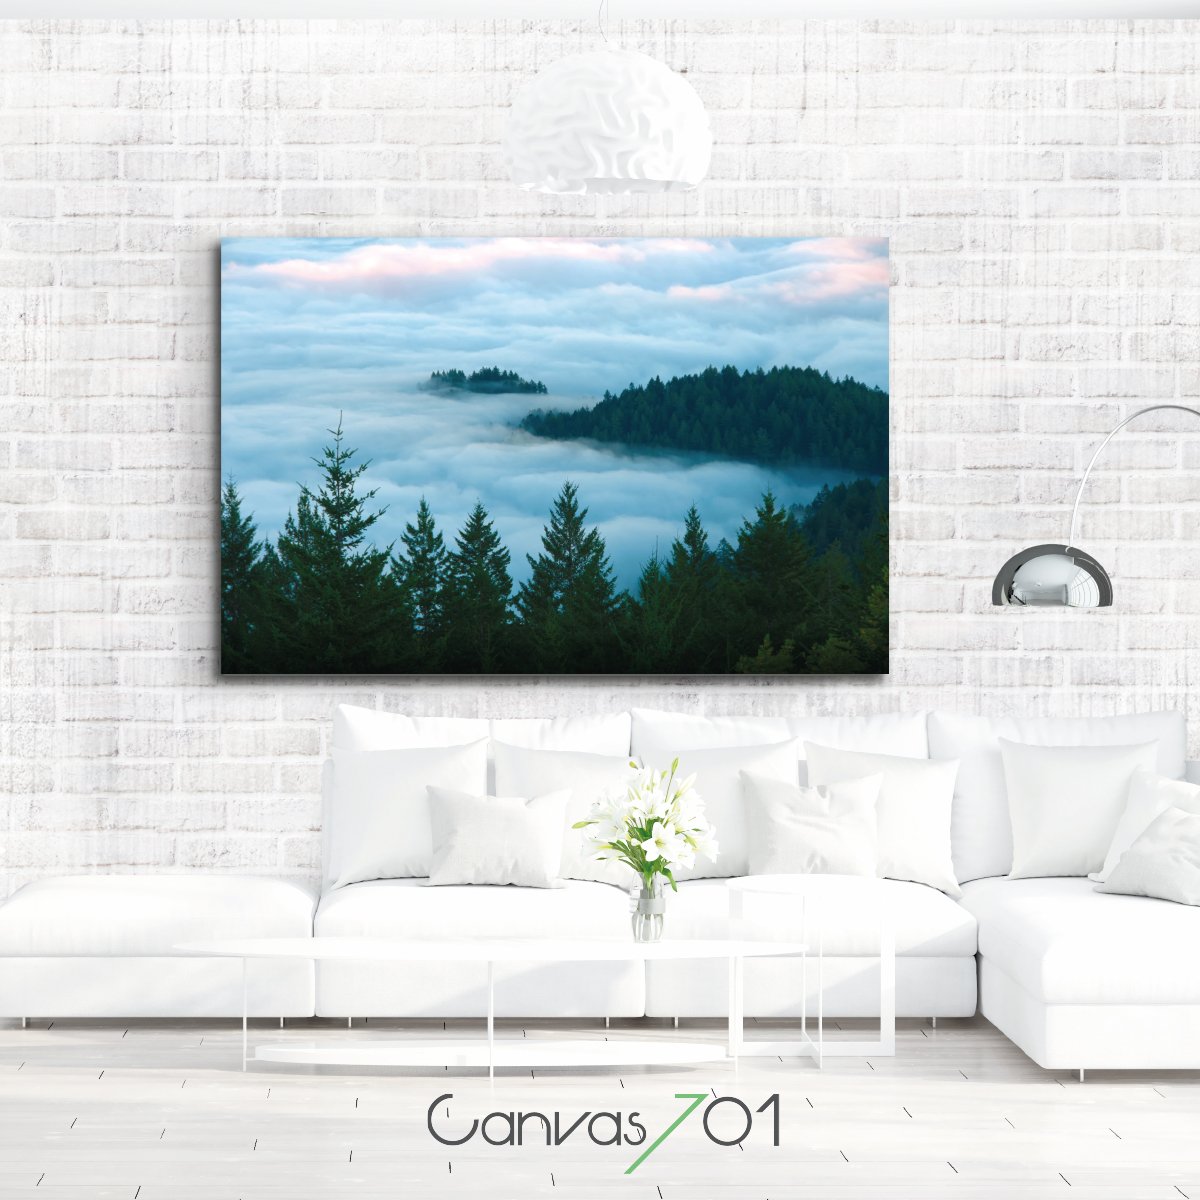 Canvas701 | Bulut Manzara Kanvas Tablo